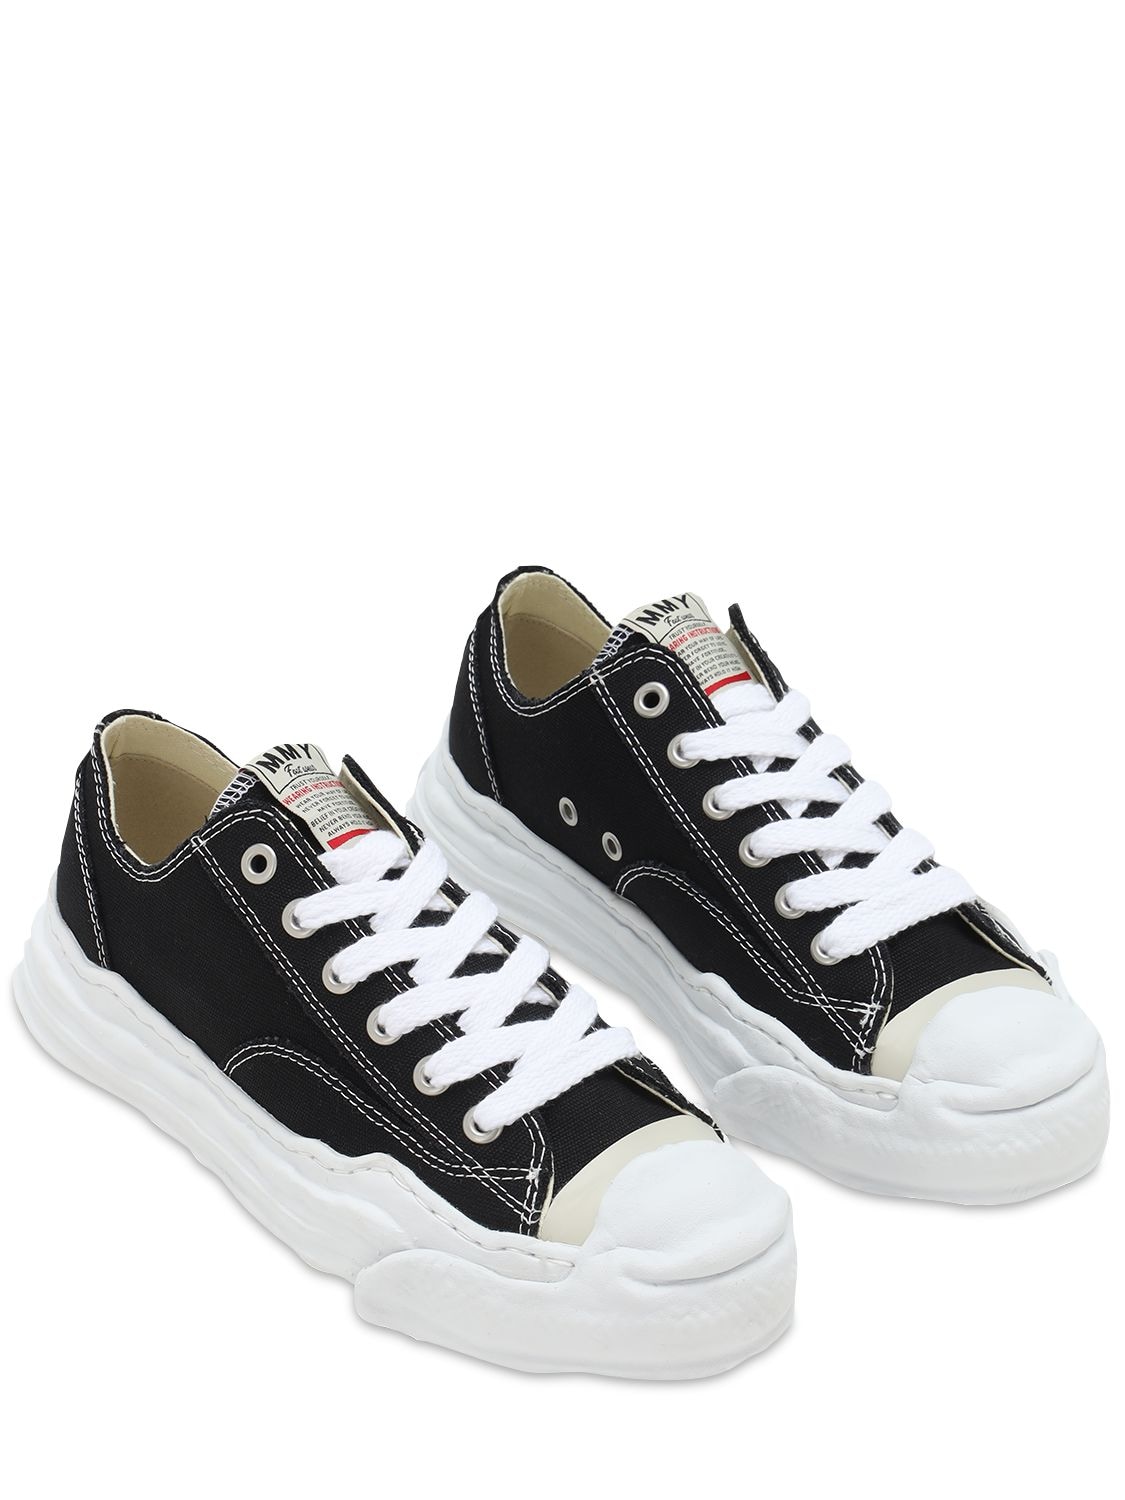 Original Sole Sneakers A01fw702 In Black